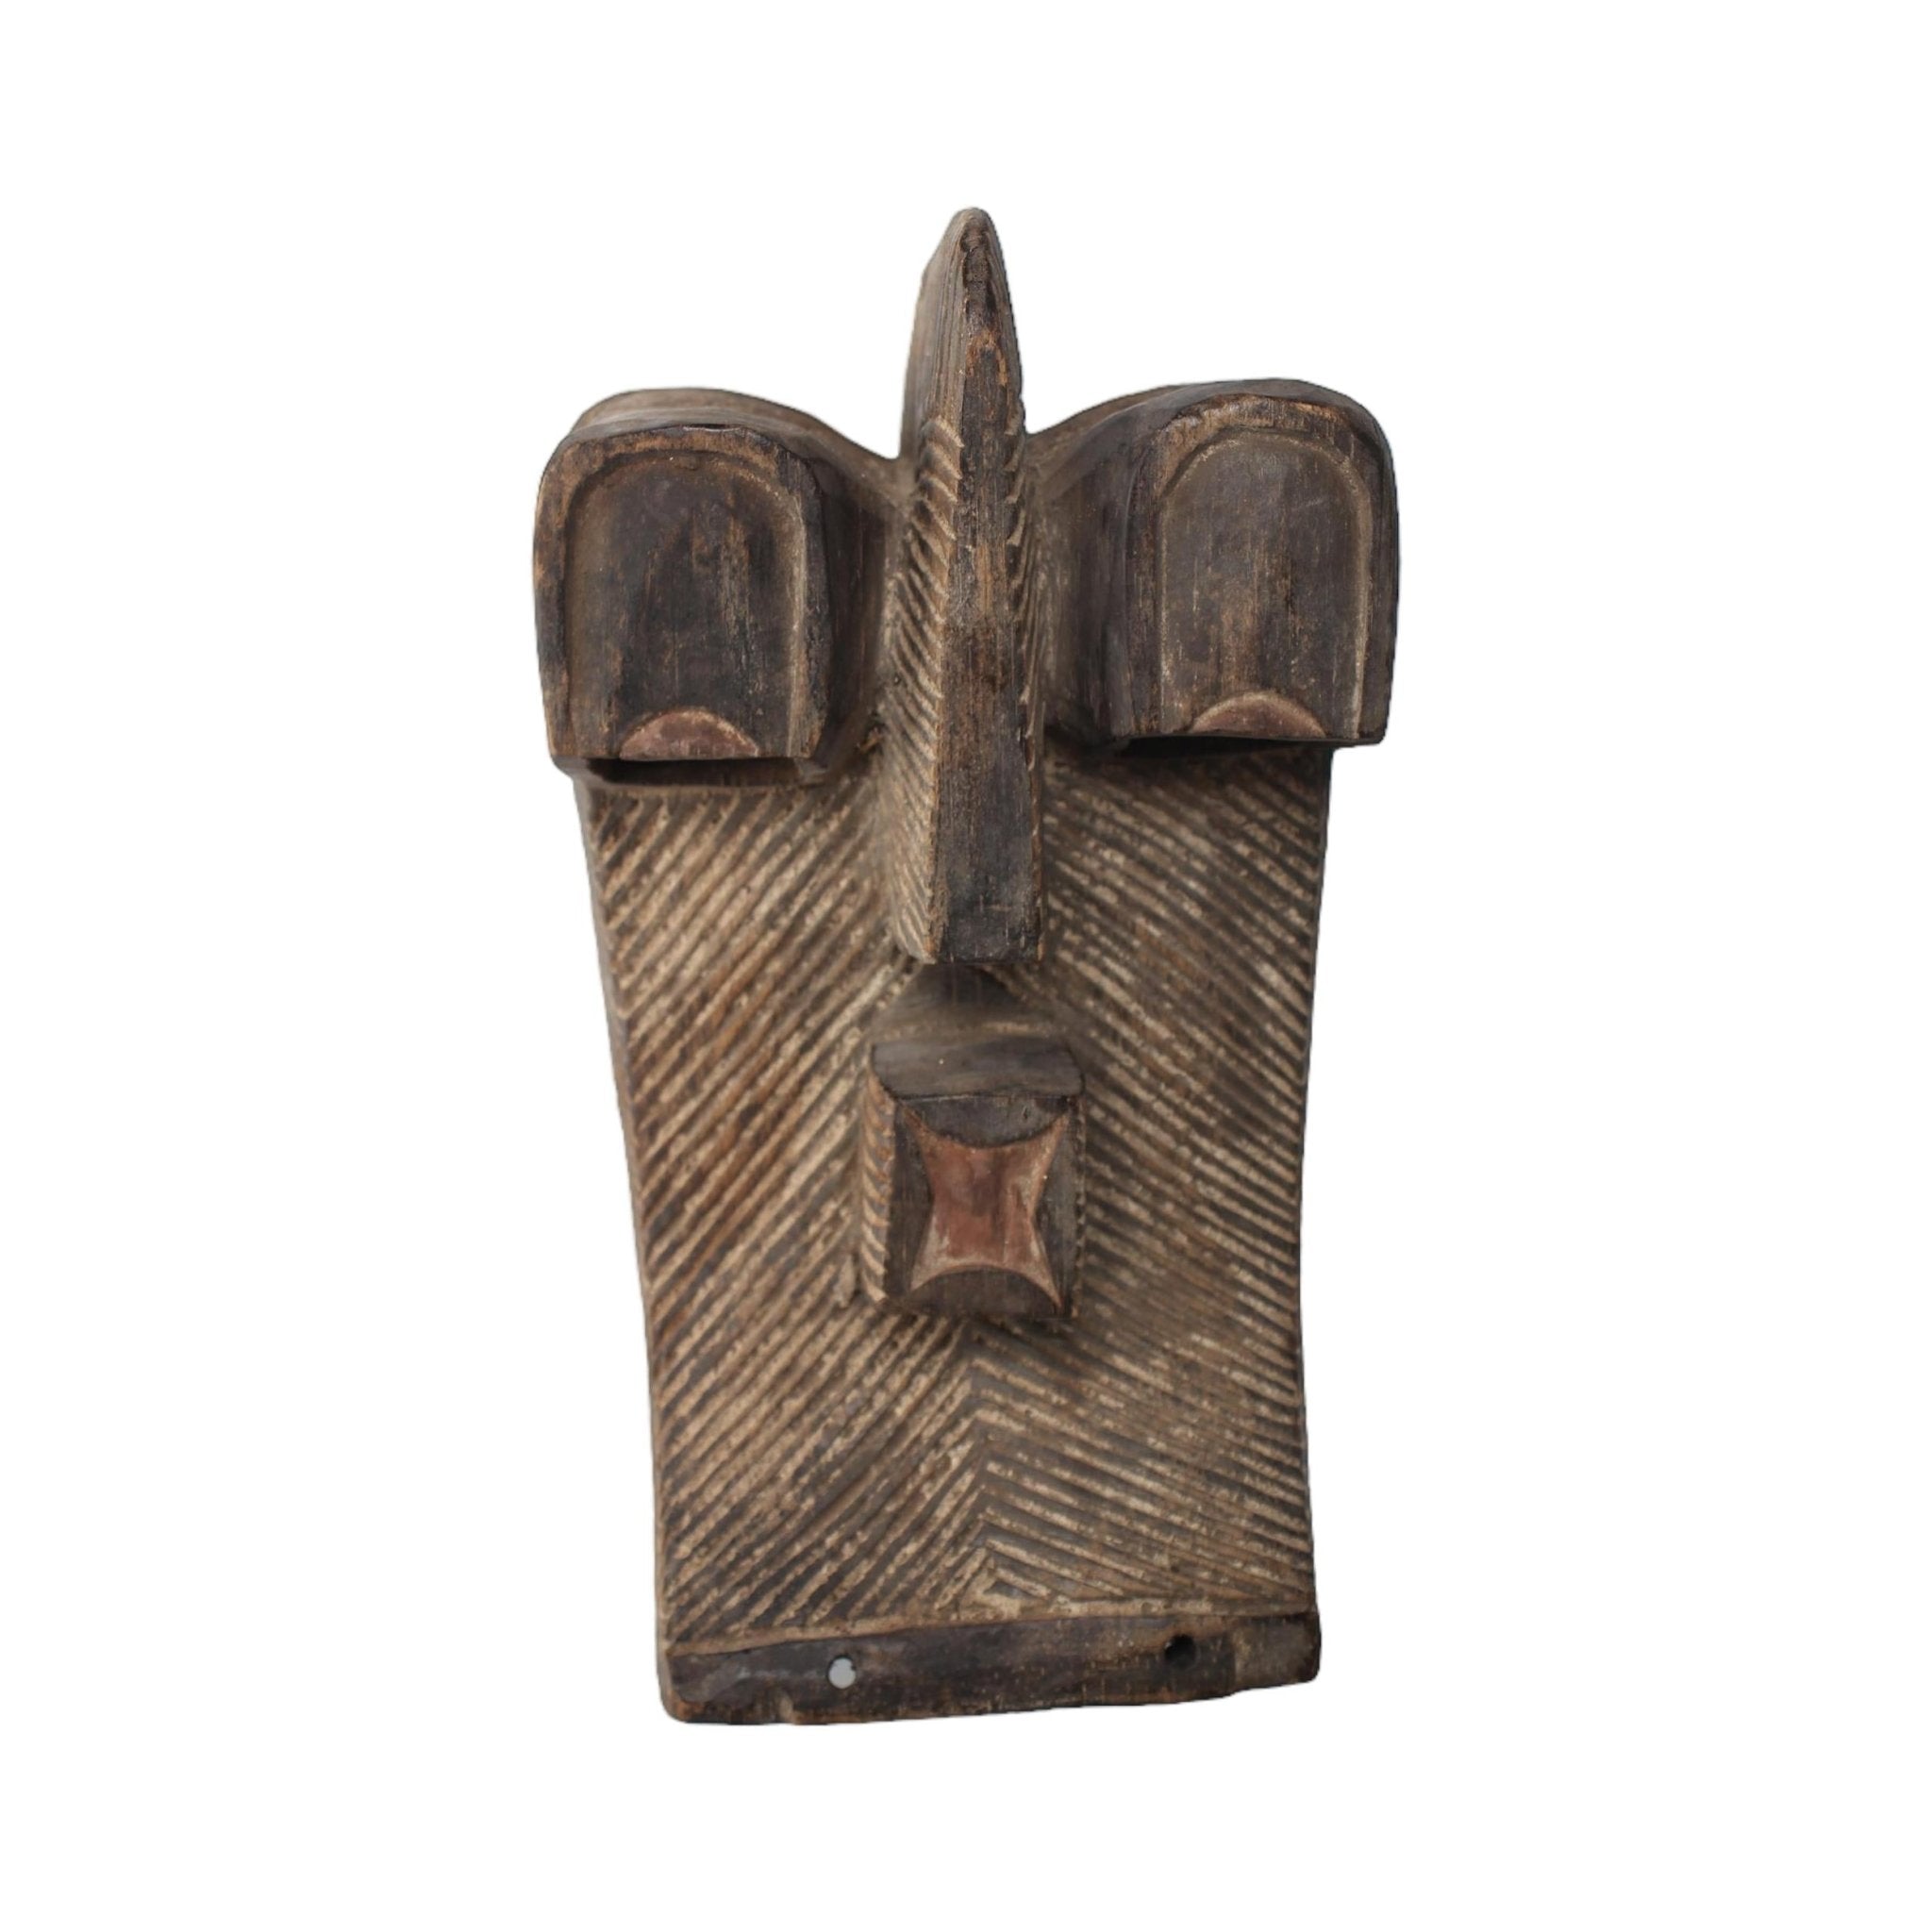 Basonge/Songye Tribe Mask ~13.4" Tall - African Angel Art - Mask